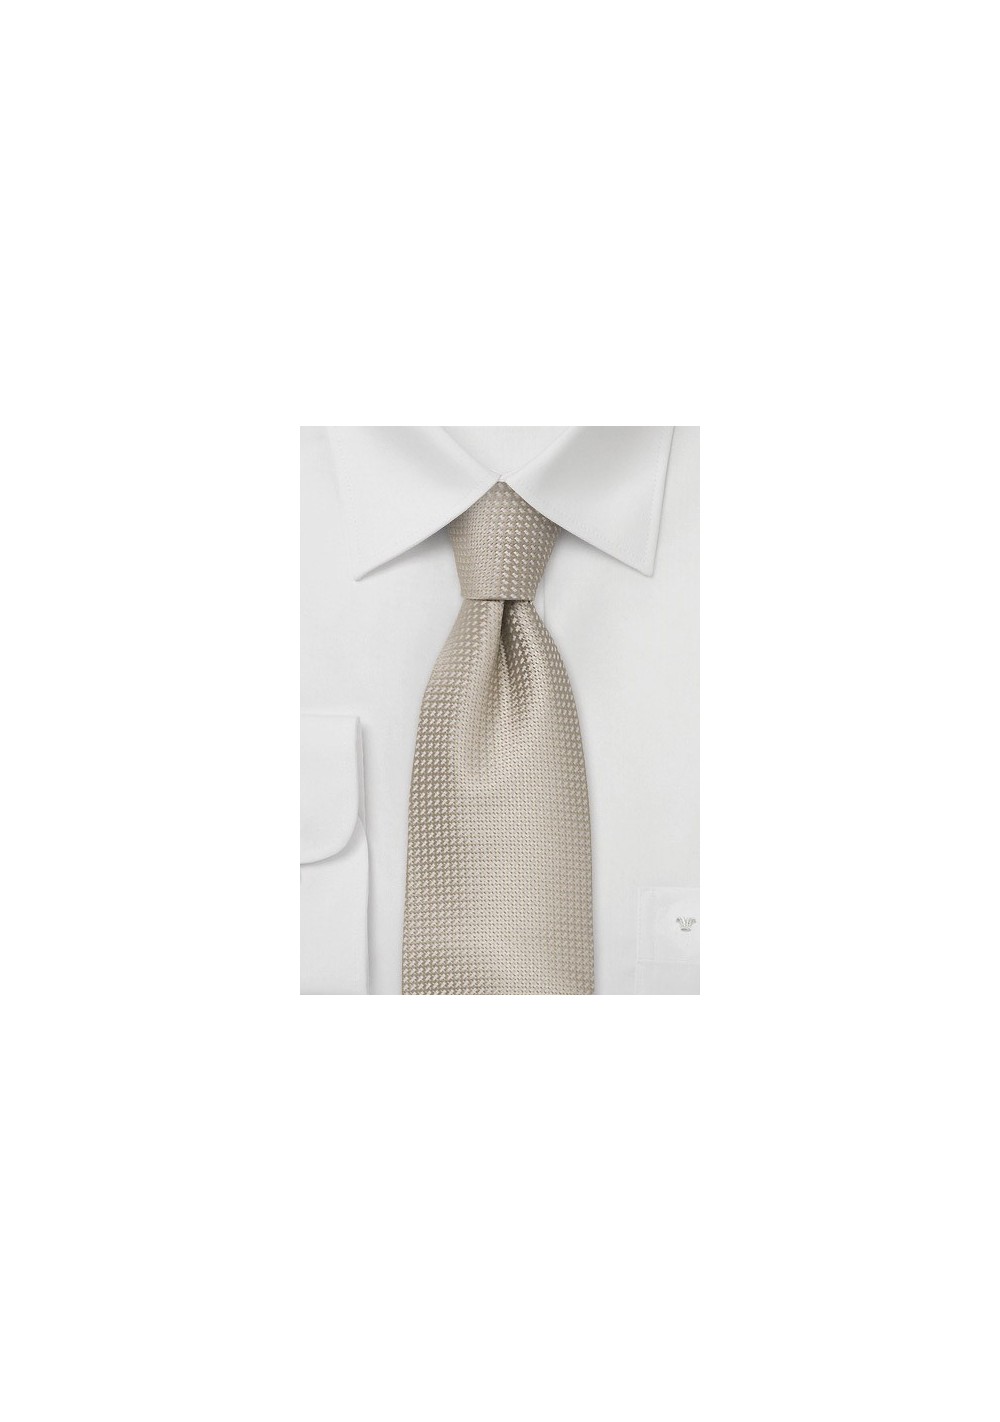 Elegant Summer Tie in Wheat-Tan Color